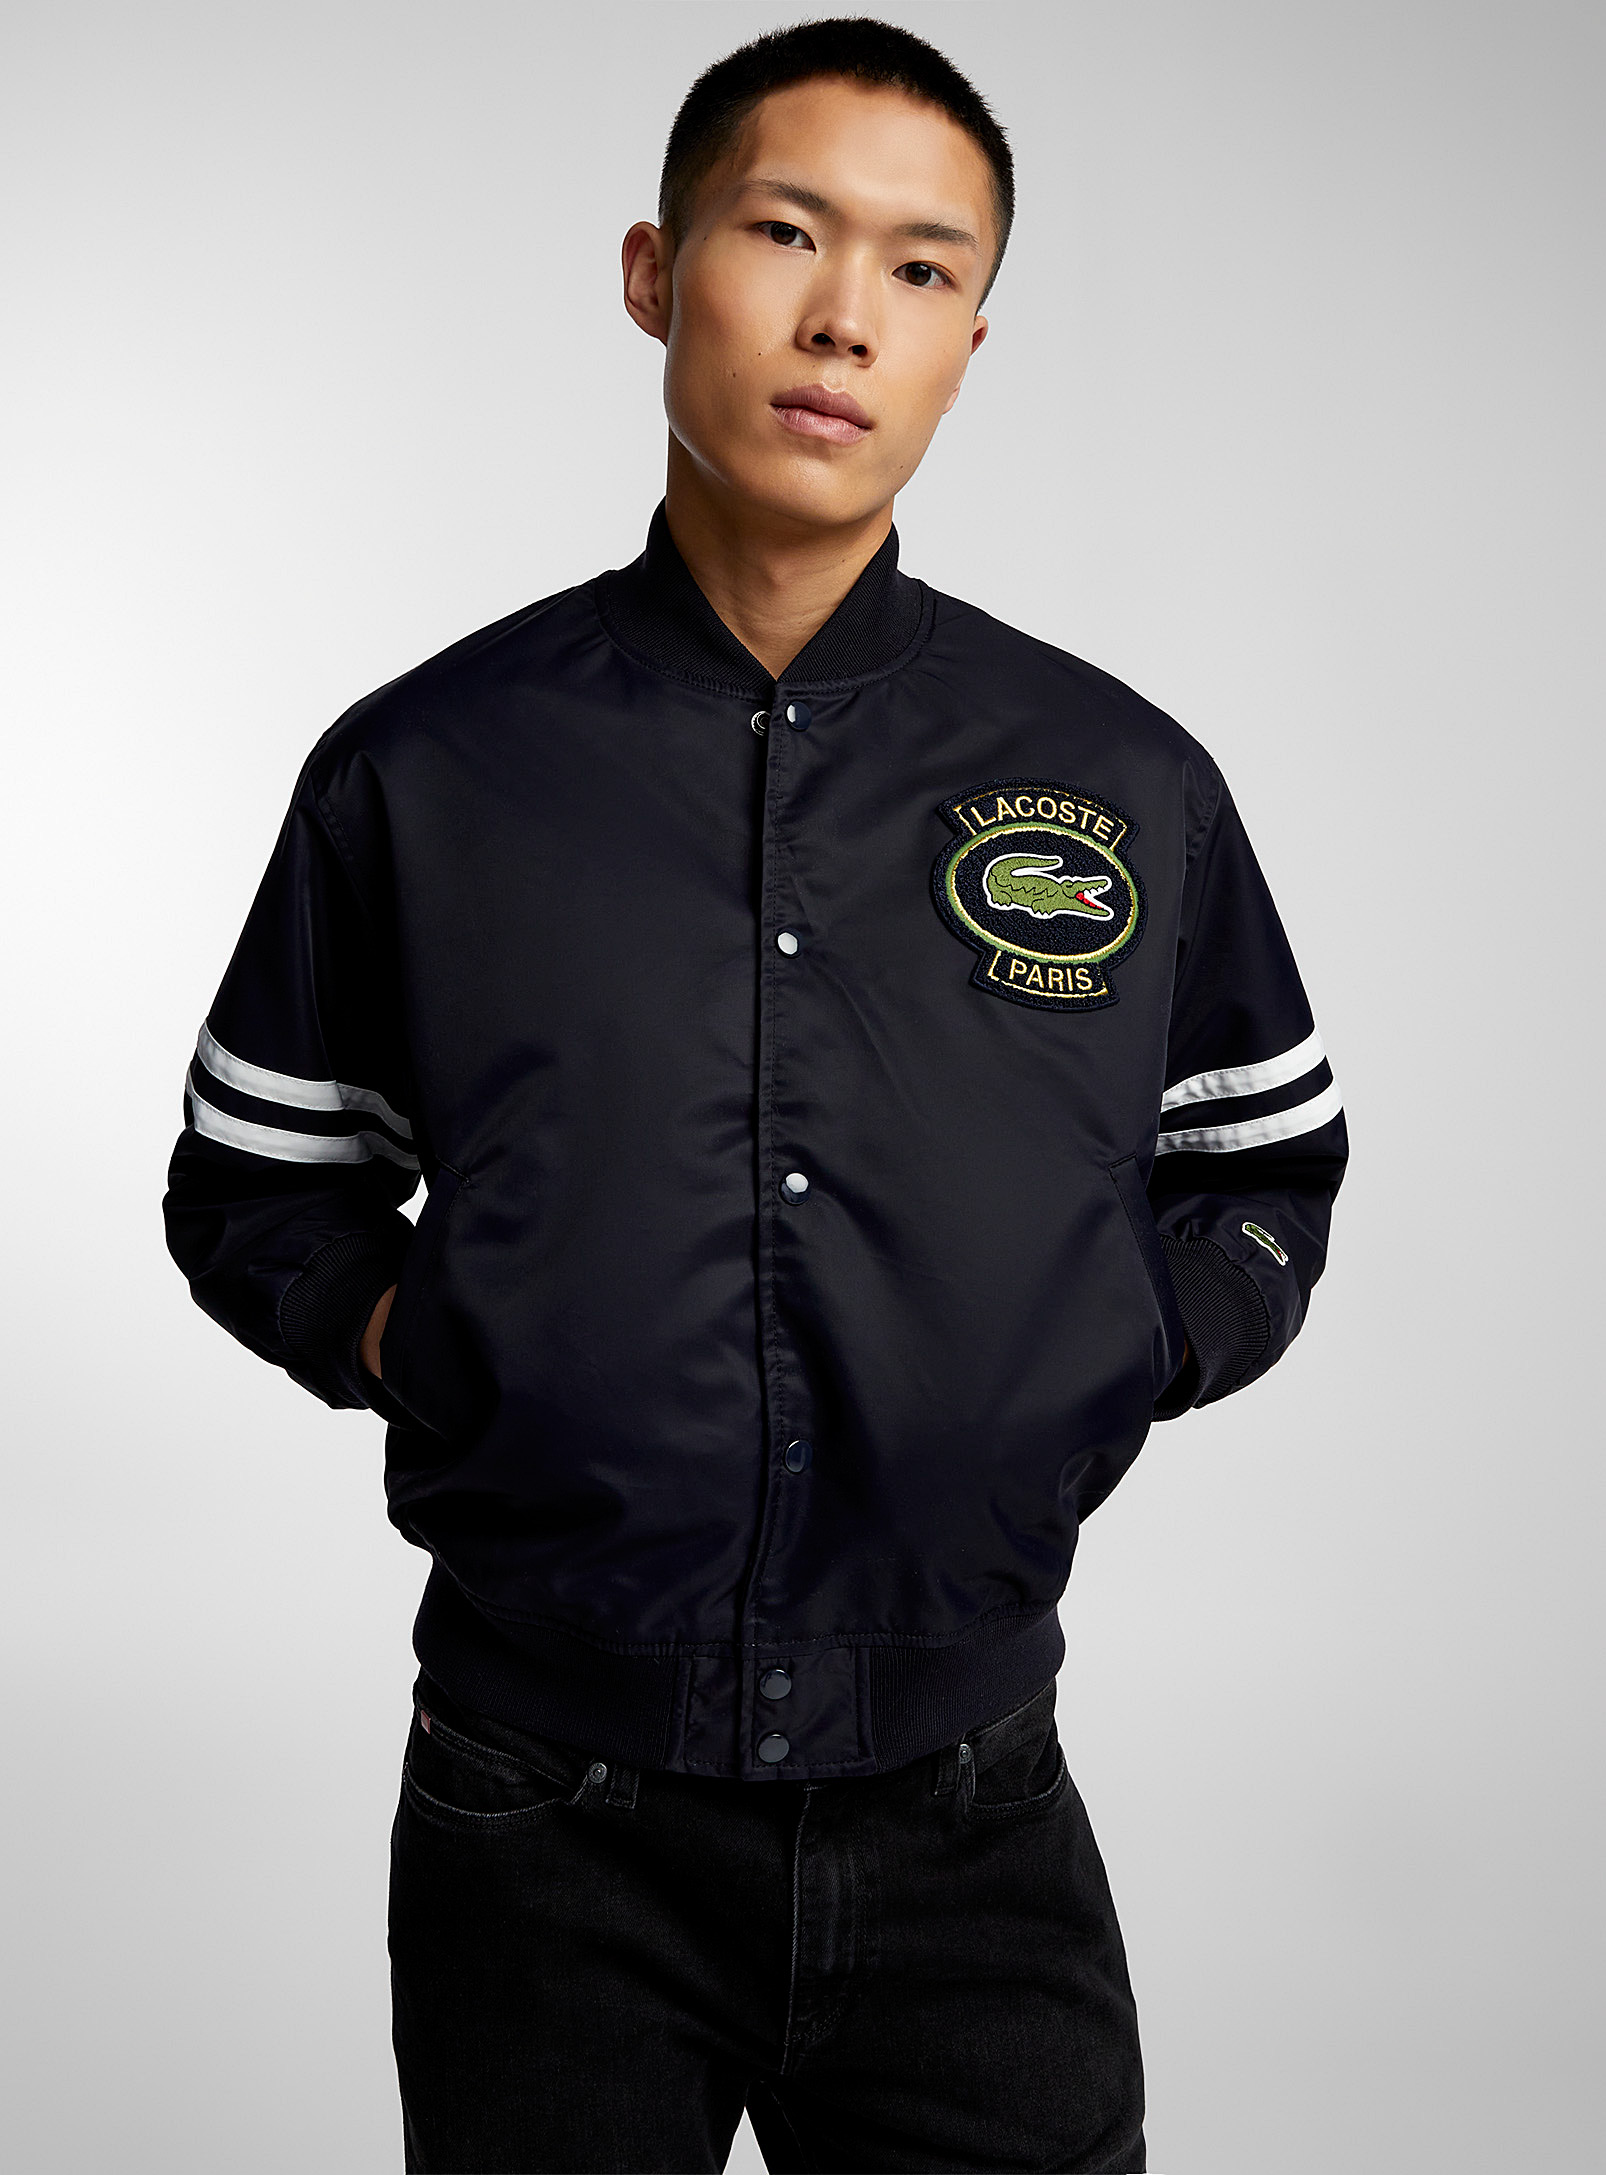 Lacoste - Men's Team athletic bomber jacket